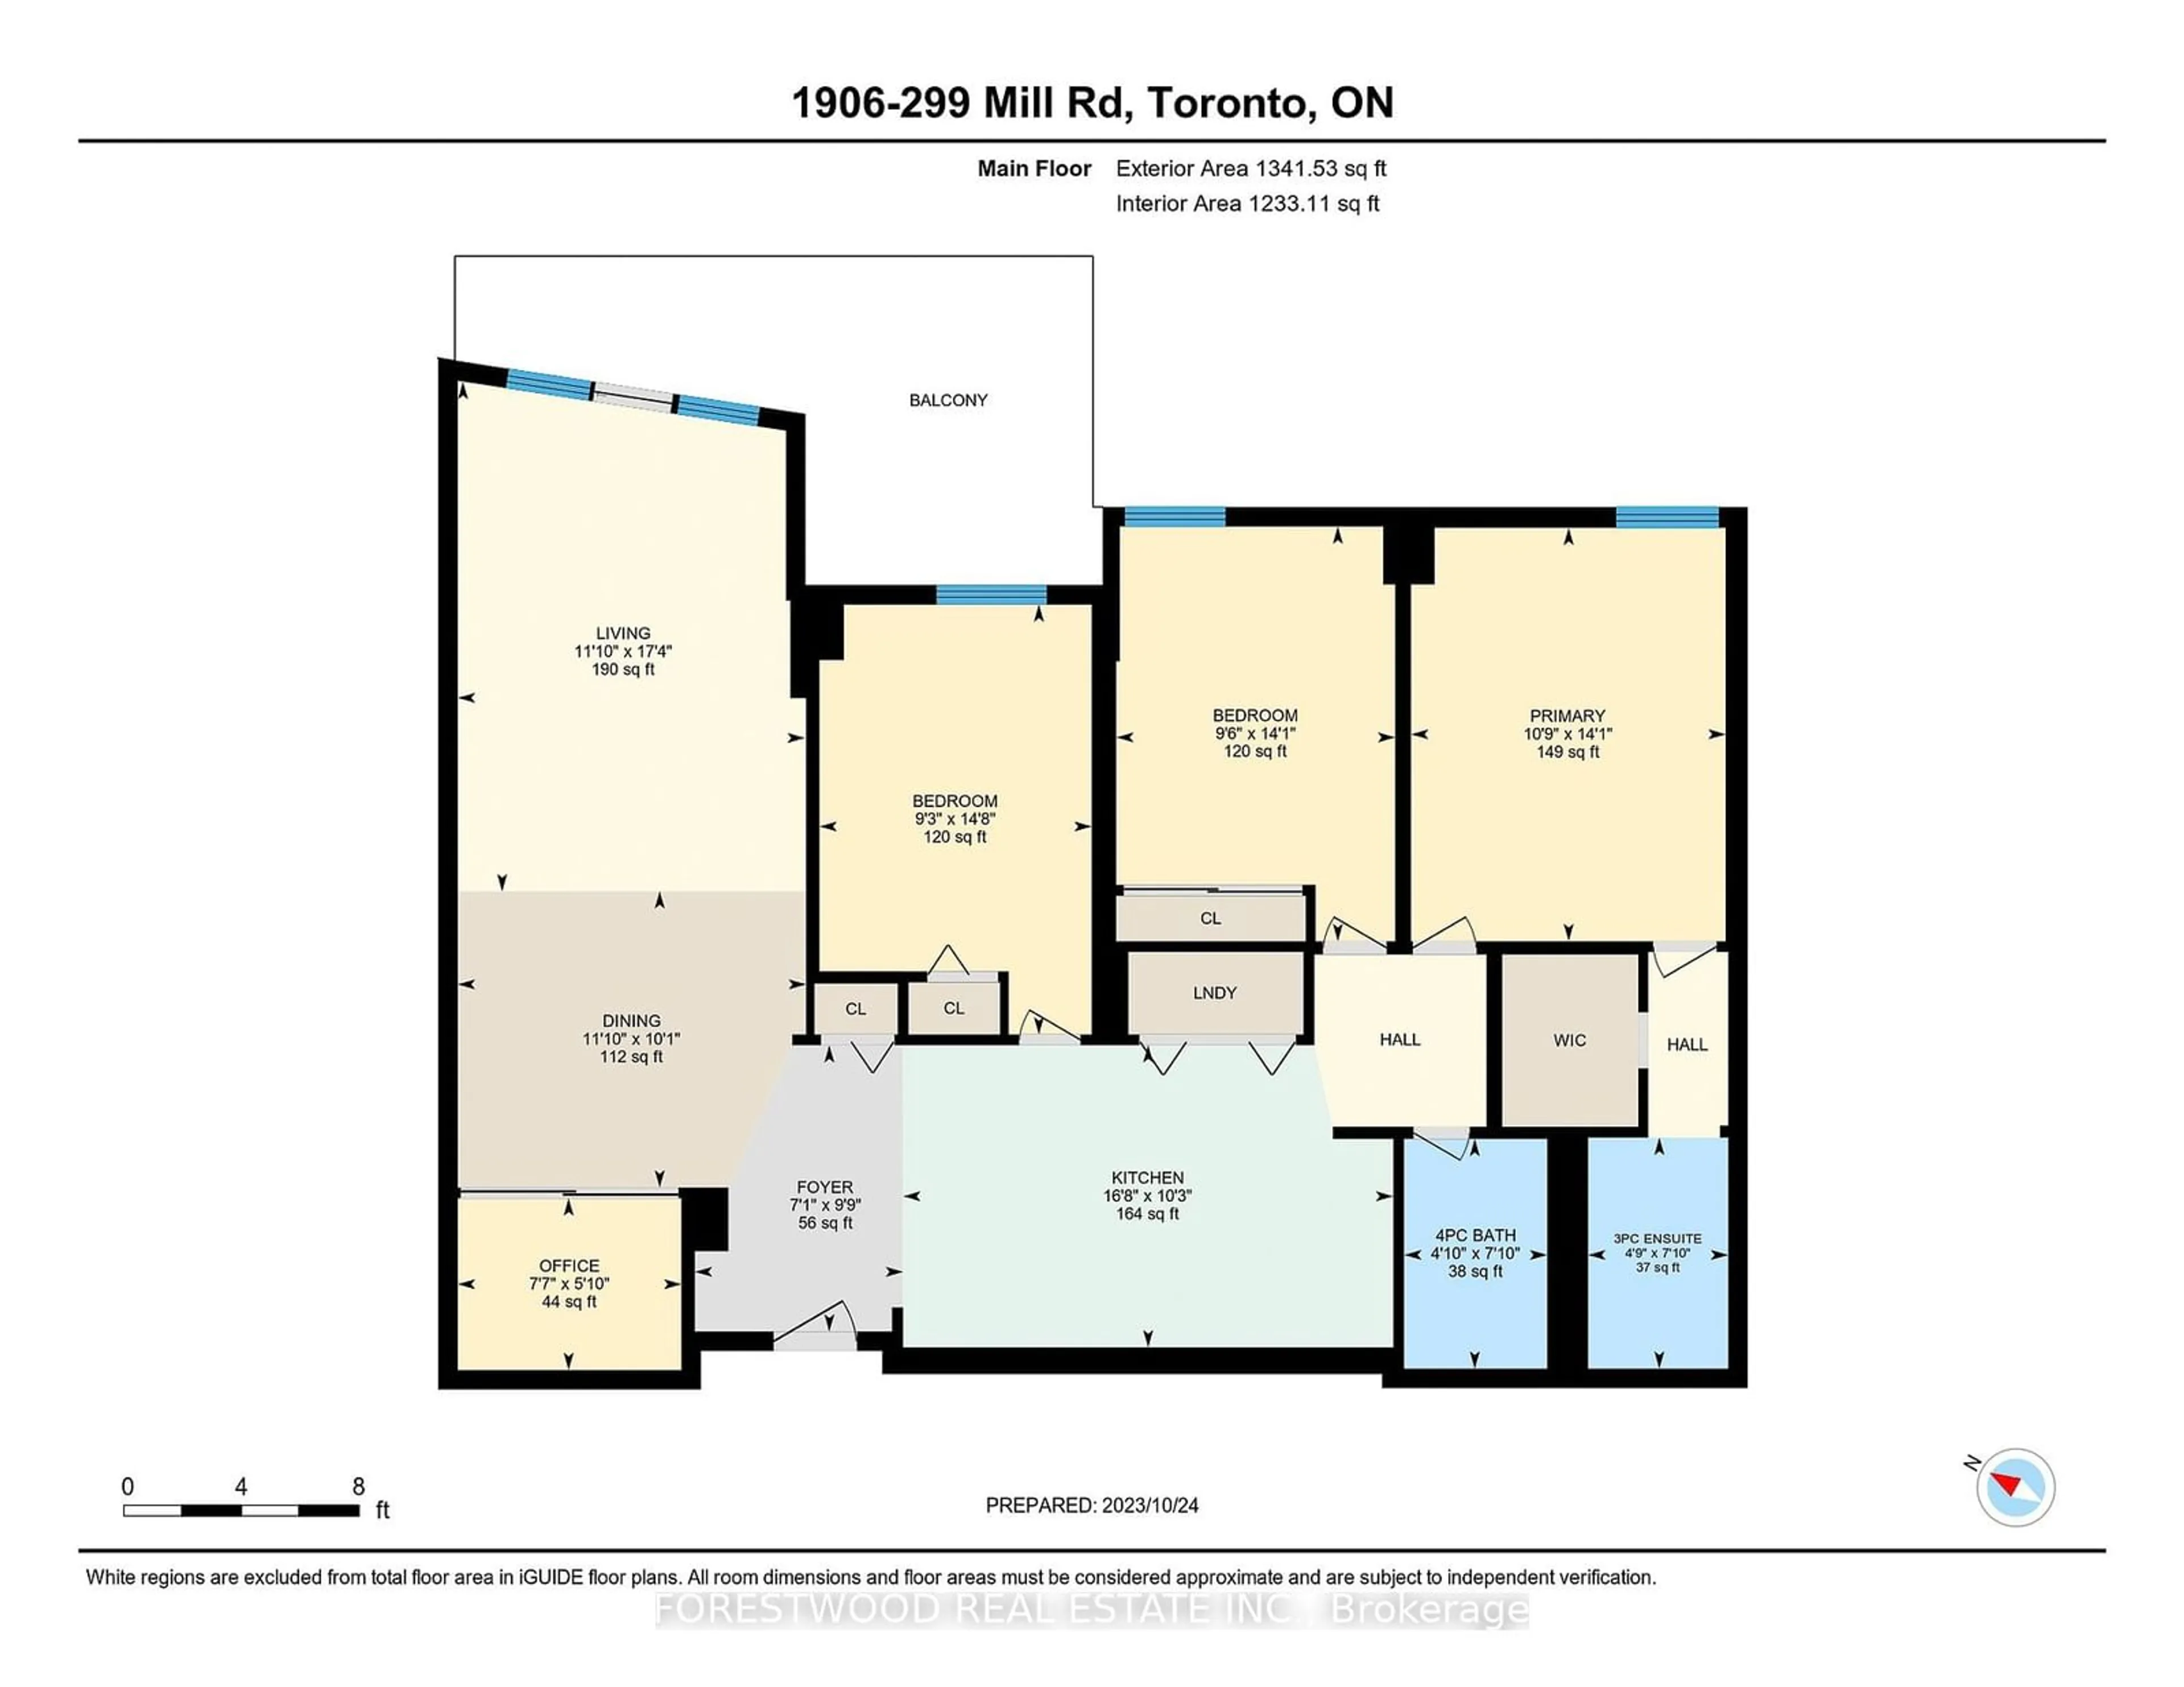 Floor plan for 299 Mill Rd #1906, Toronto Ontario M9C 4V9